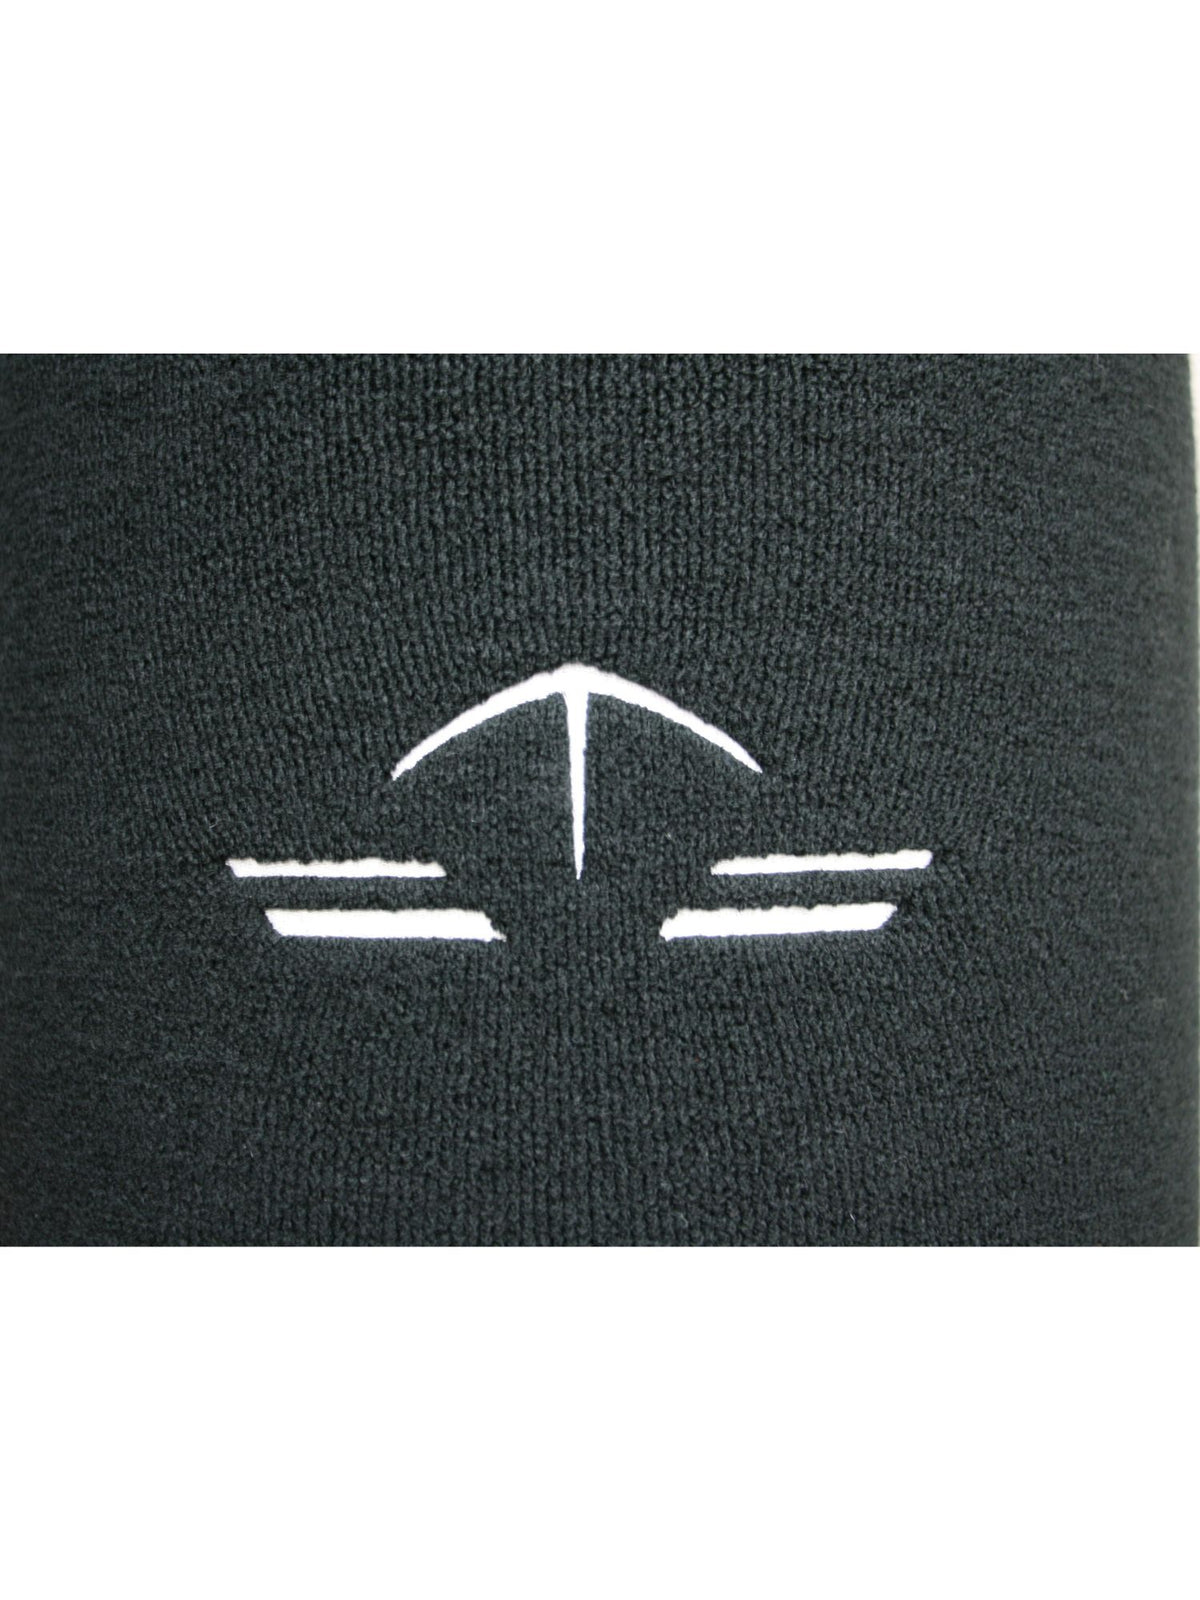 Sealine Fendercover Logo